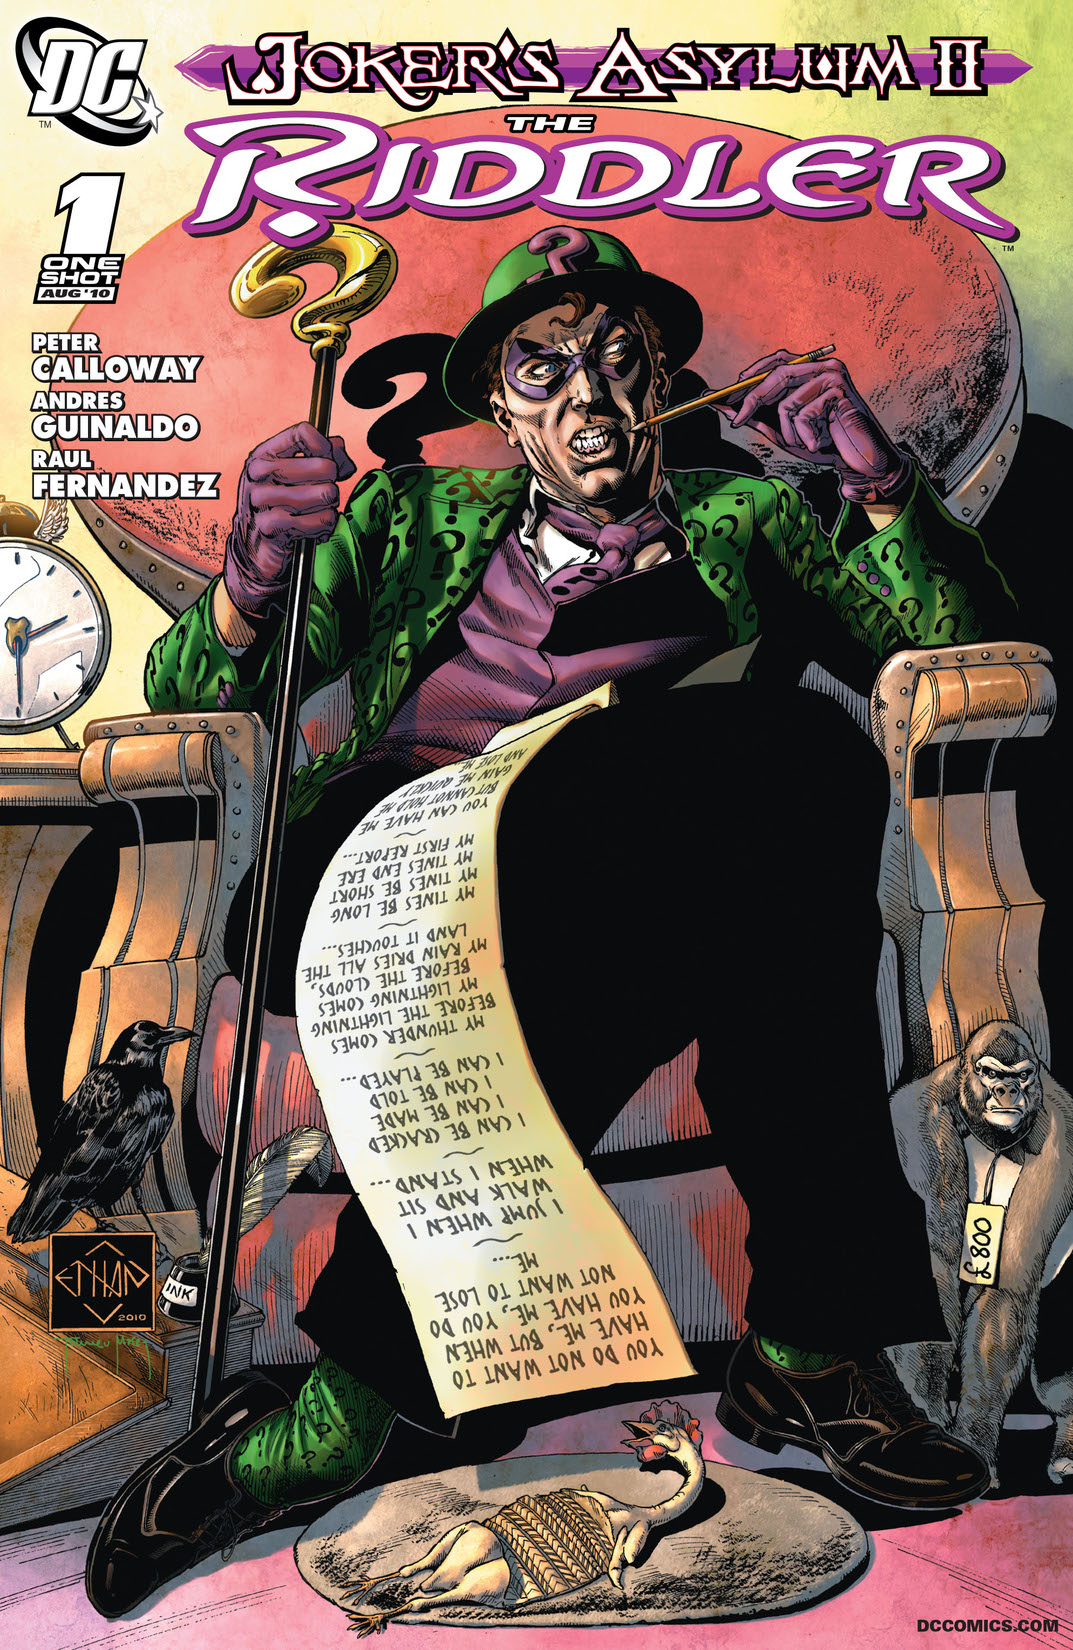 Joker's Asylum II: The Riddler #1 preview images